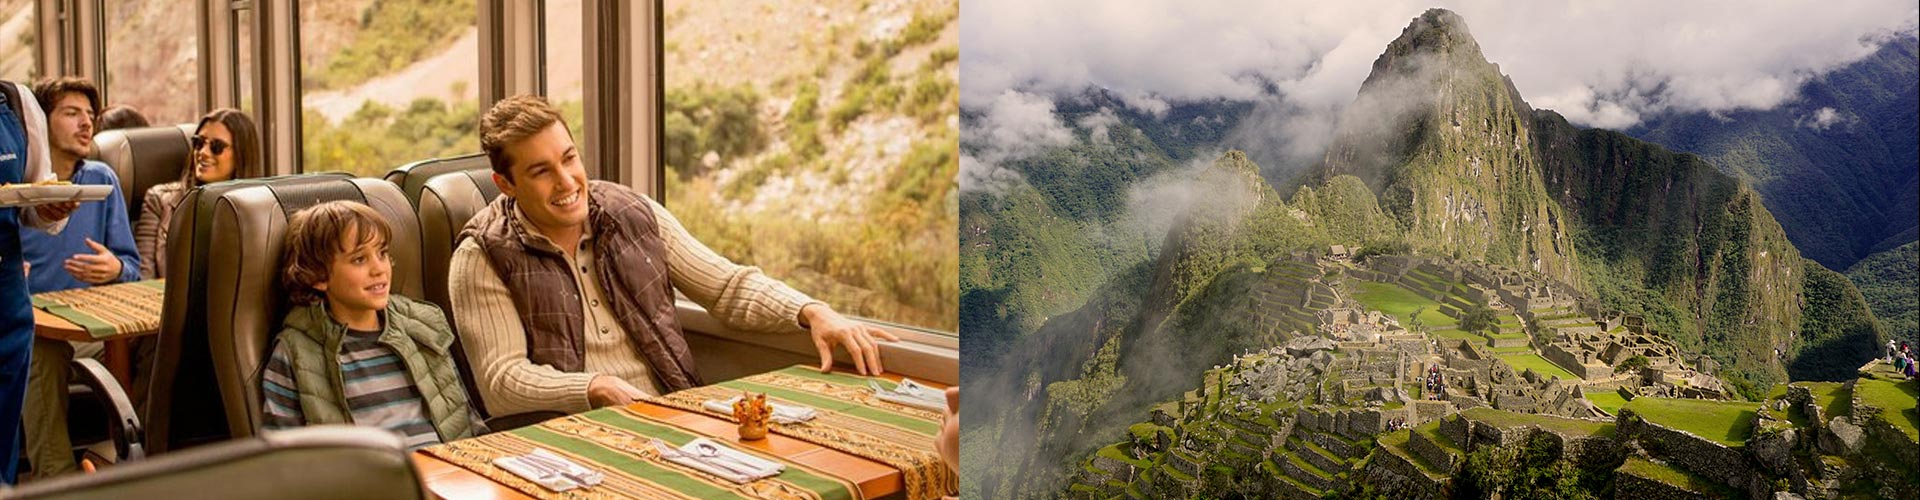 Tour to Machu Picchu with Vistadome Trail